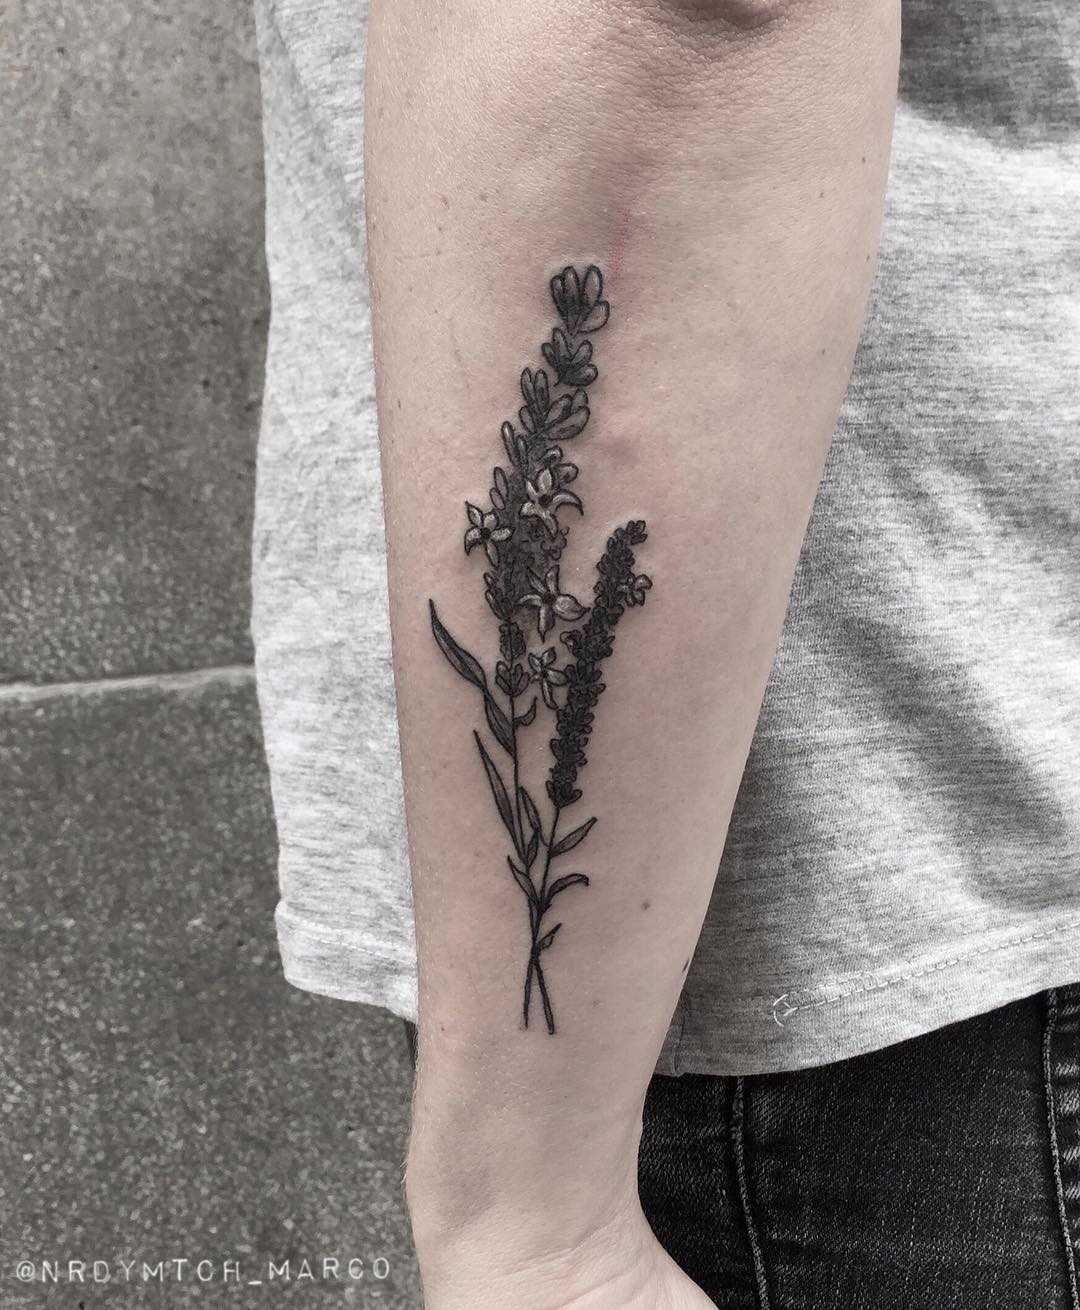 Lavender Twigs Temporary Tattoos – NatureTats